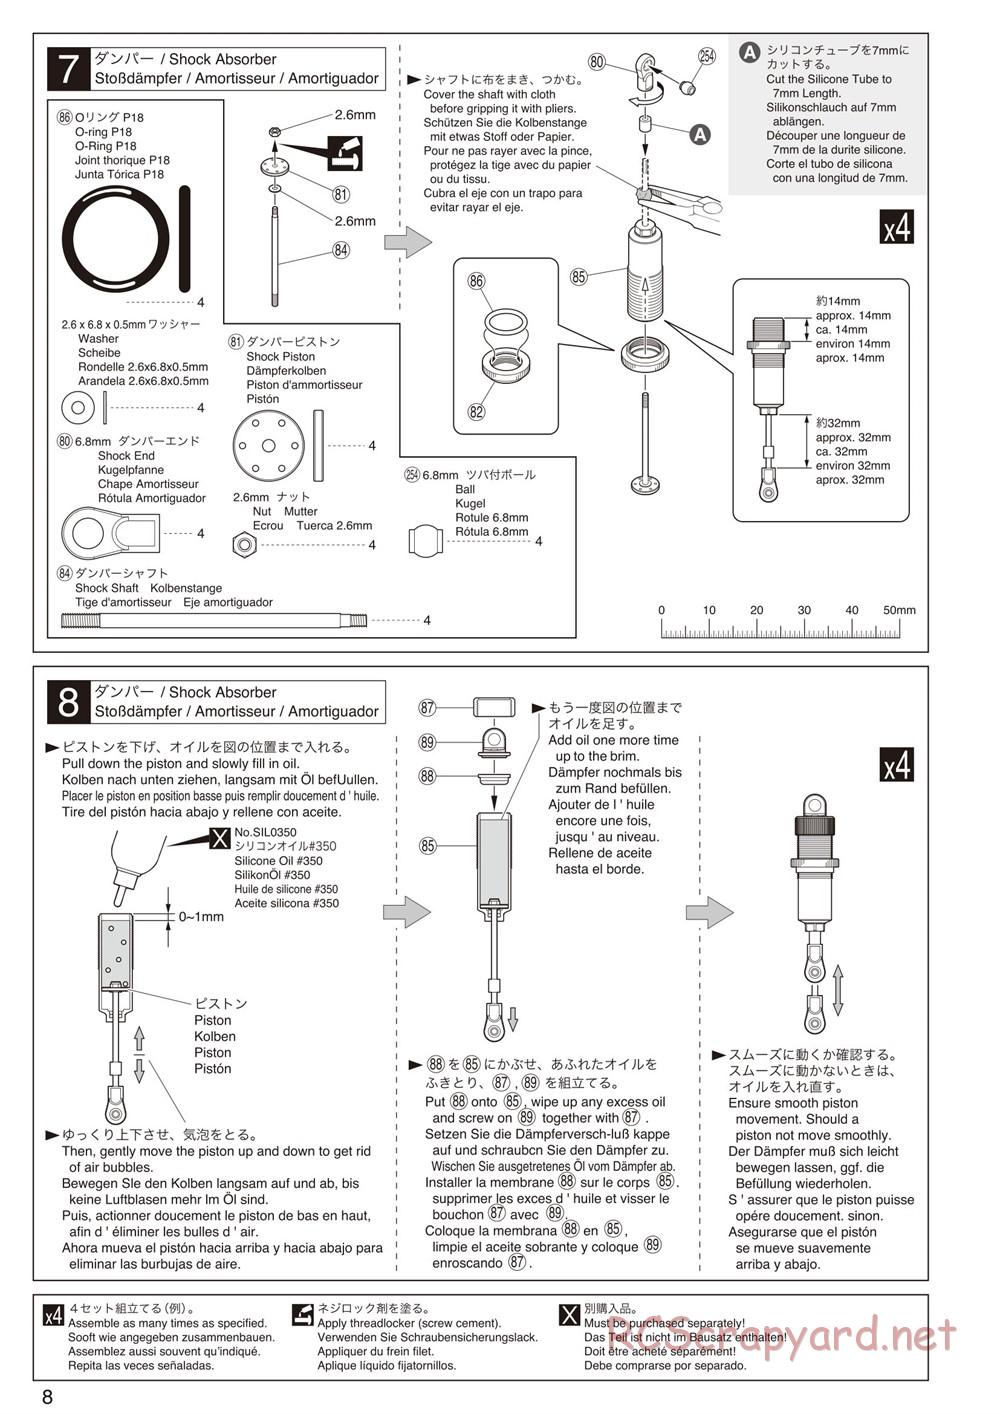 Kyosho - Mad Force Kruiser 2.0 VE - Manual - Page 8